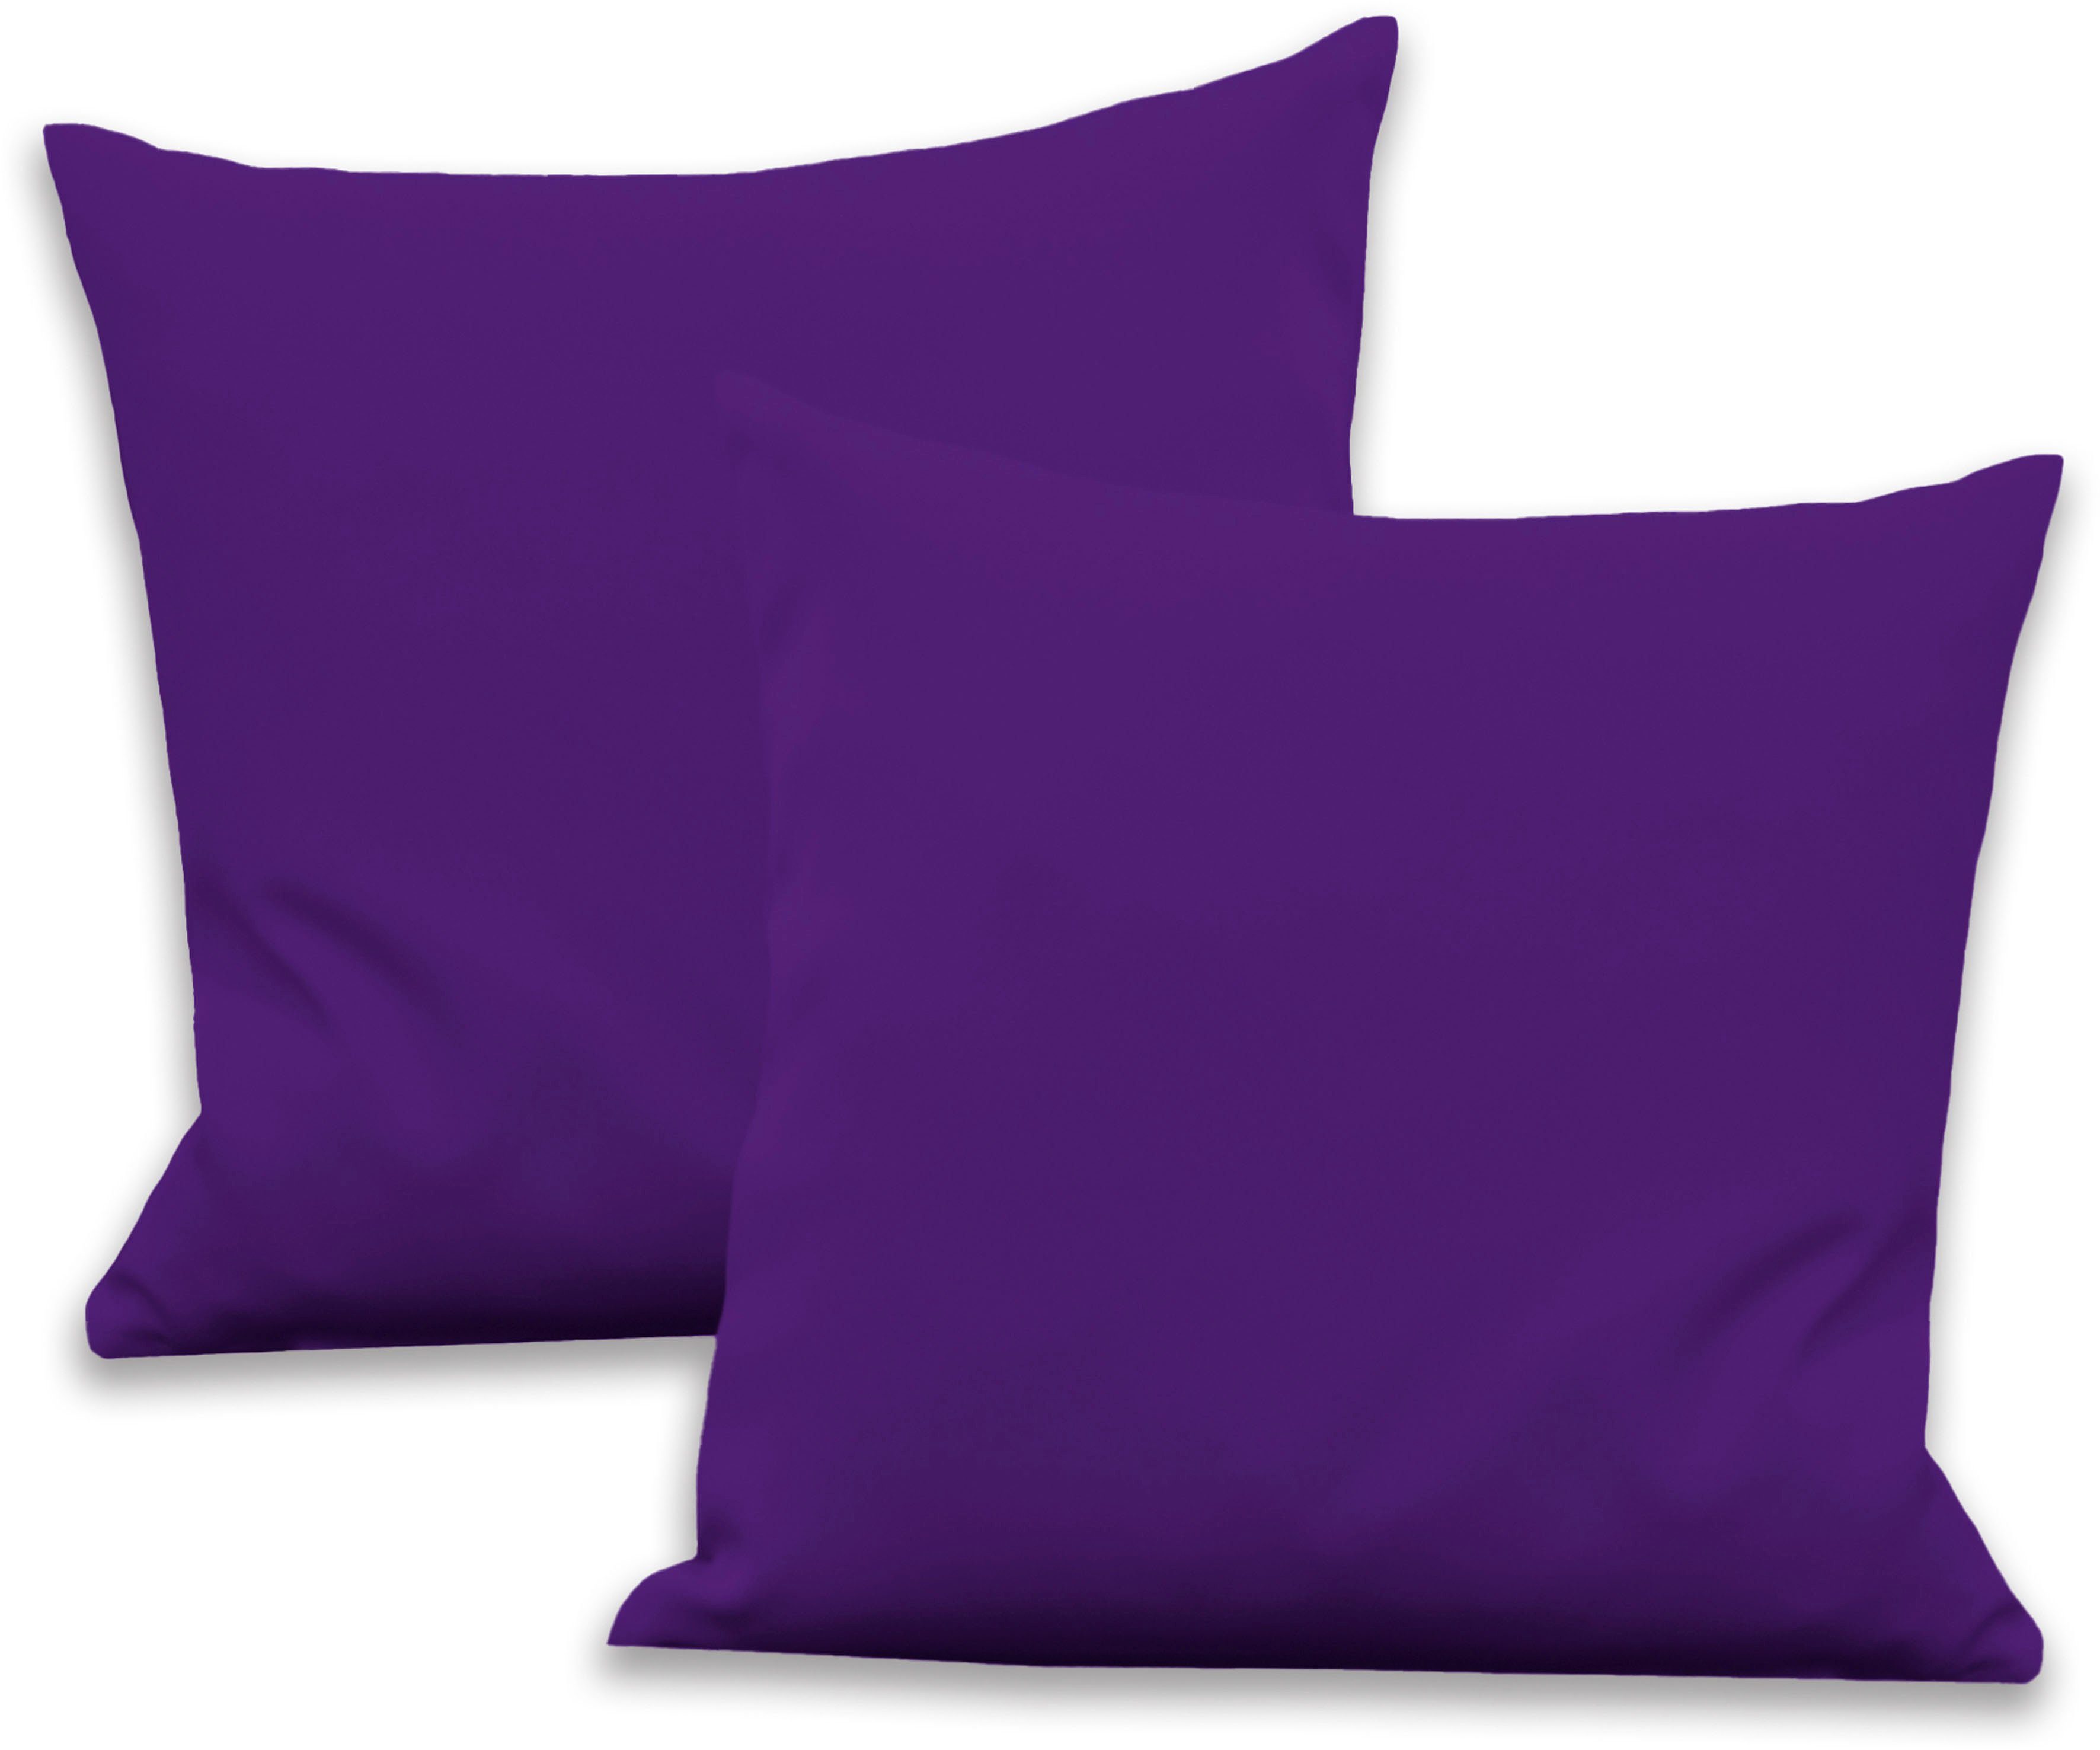 VHG Dekokissen Leon, Reißverschluss, Kissenhülle ohne Füllung, 2 Stück, unifarben violett | Dekokissen